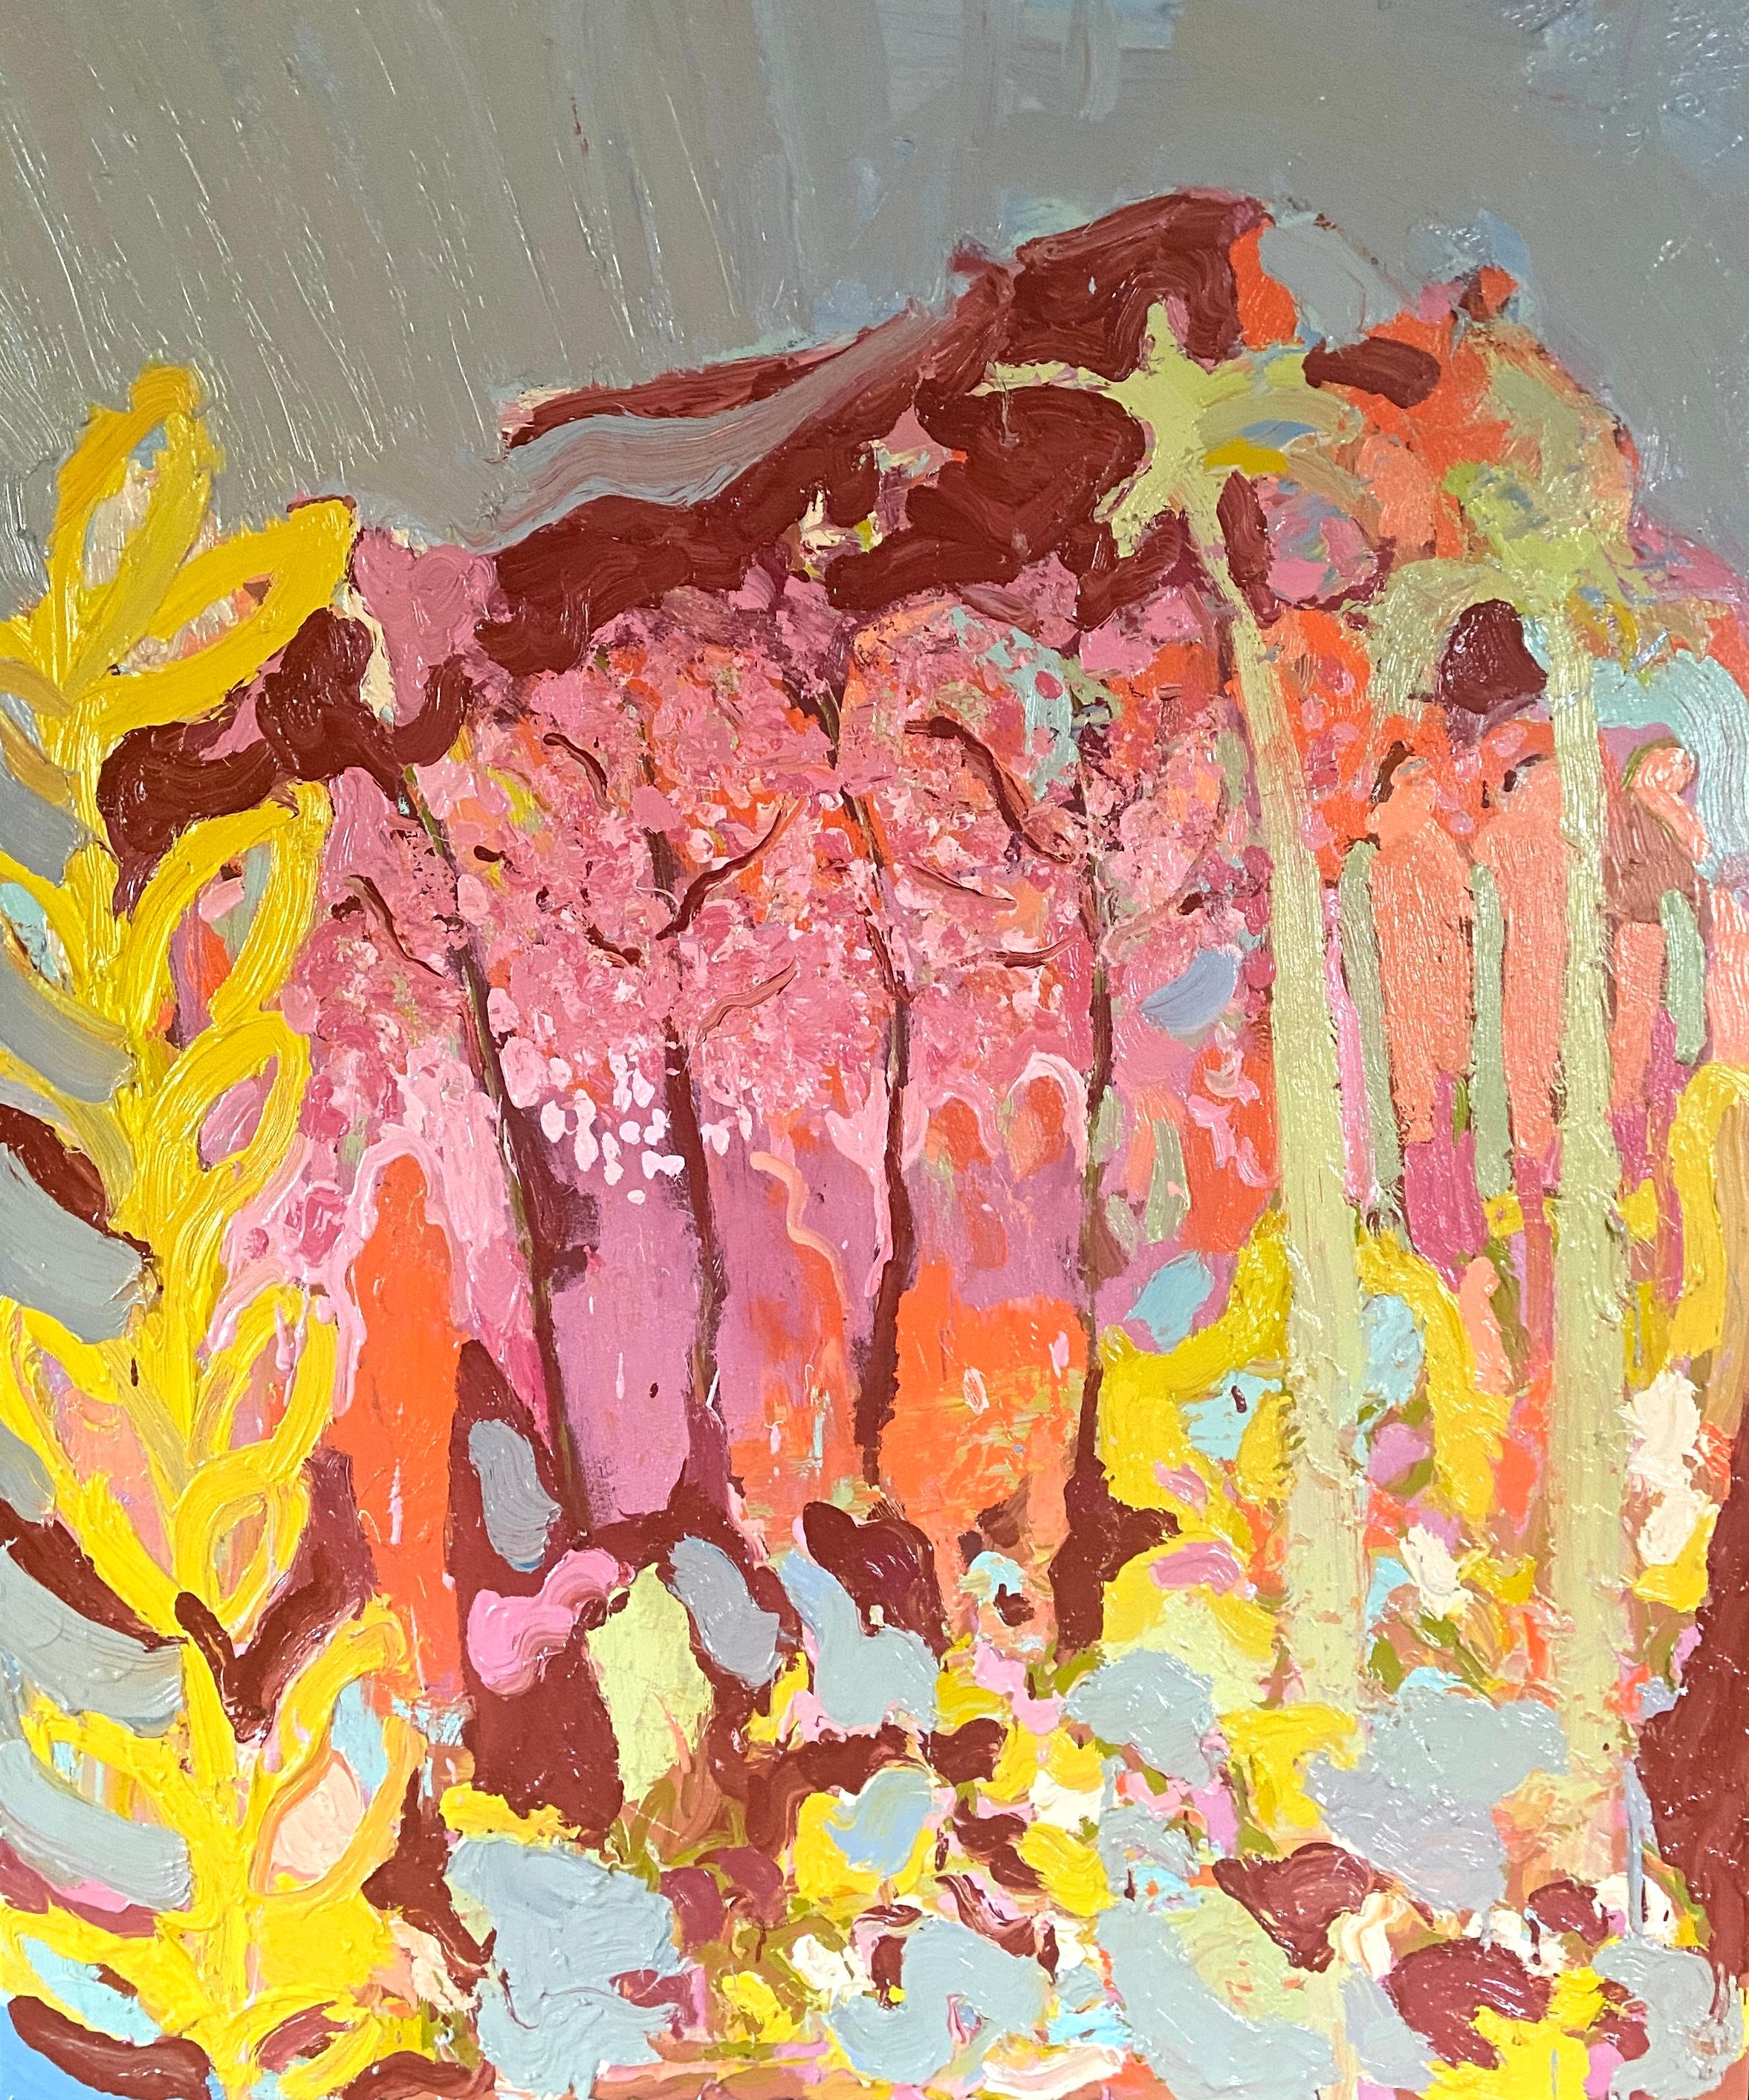 Rosa Bergahornholz Orchard. Großes abstrakt-expressionistisches Ölgemälde